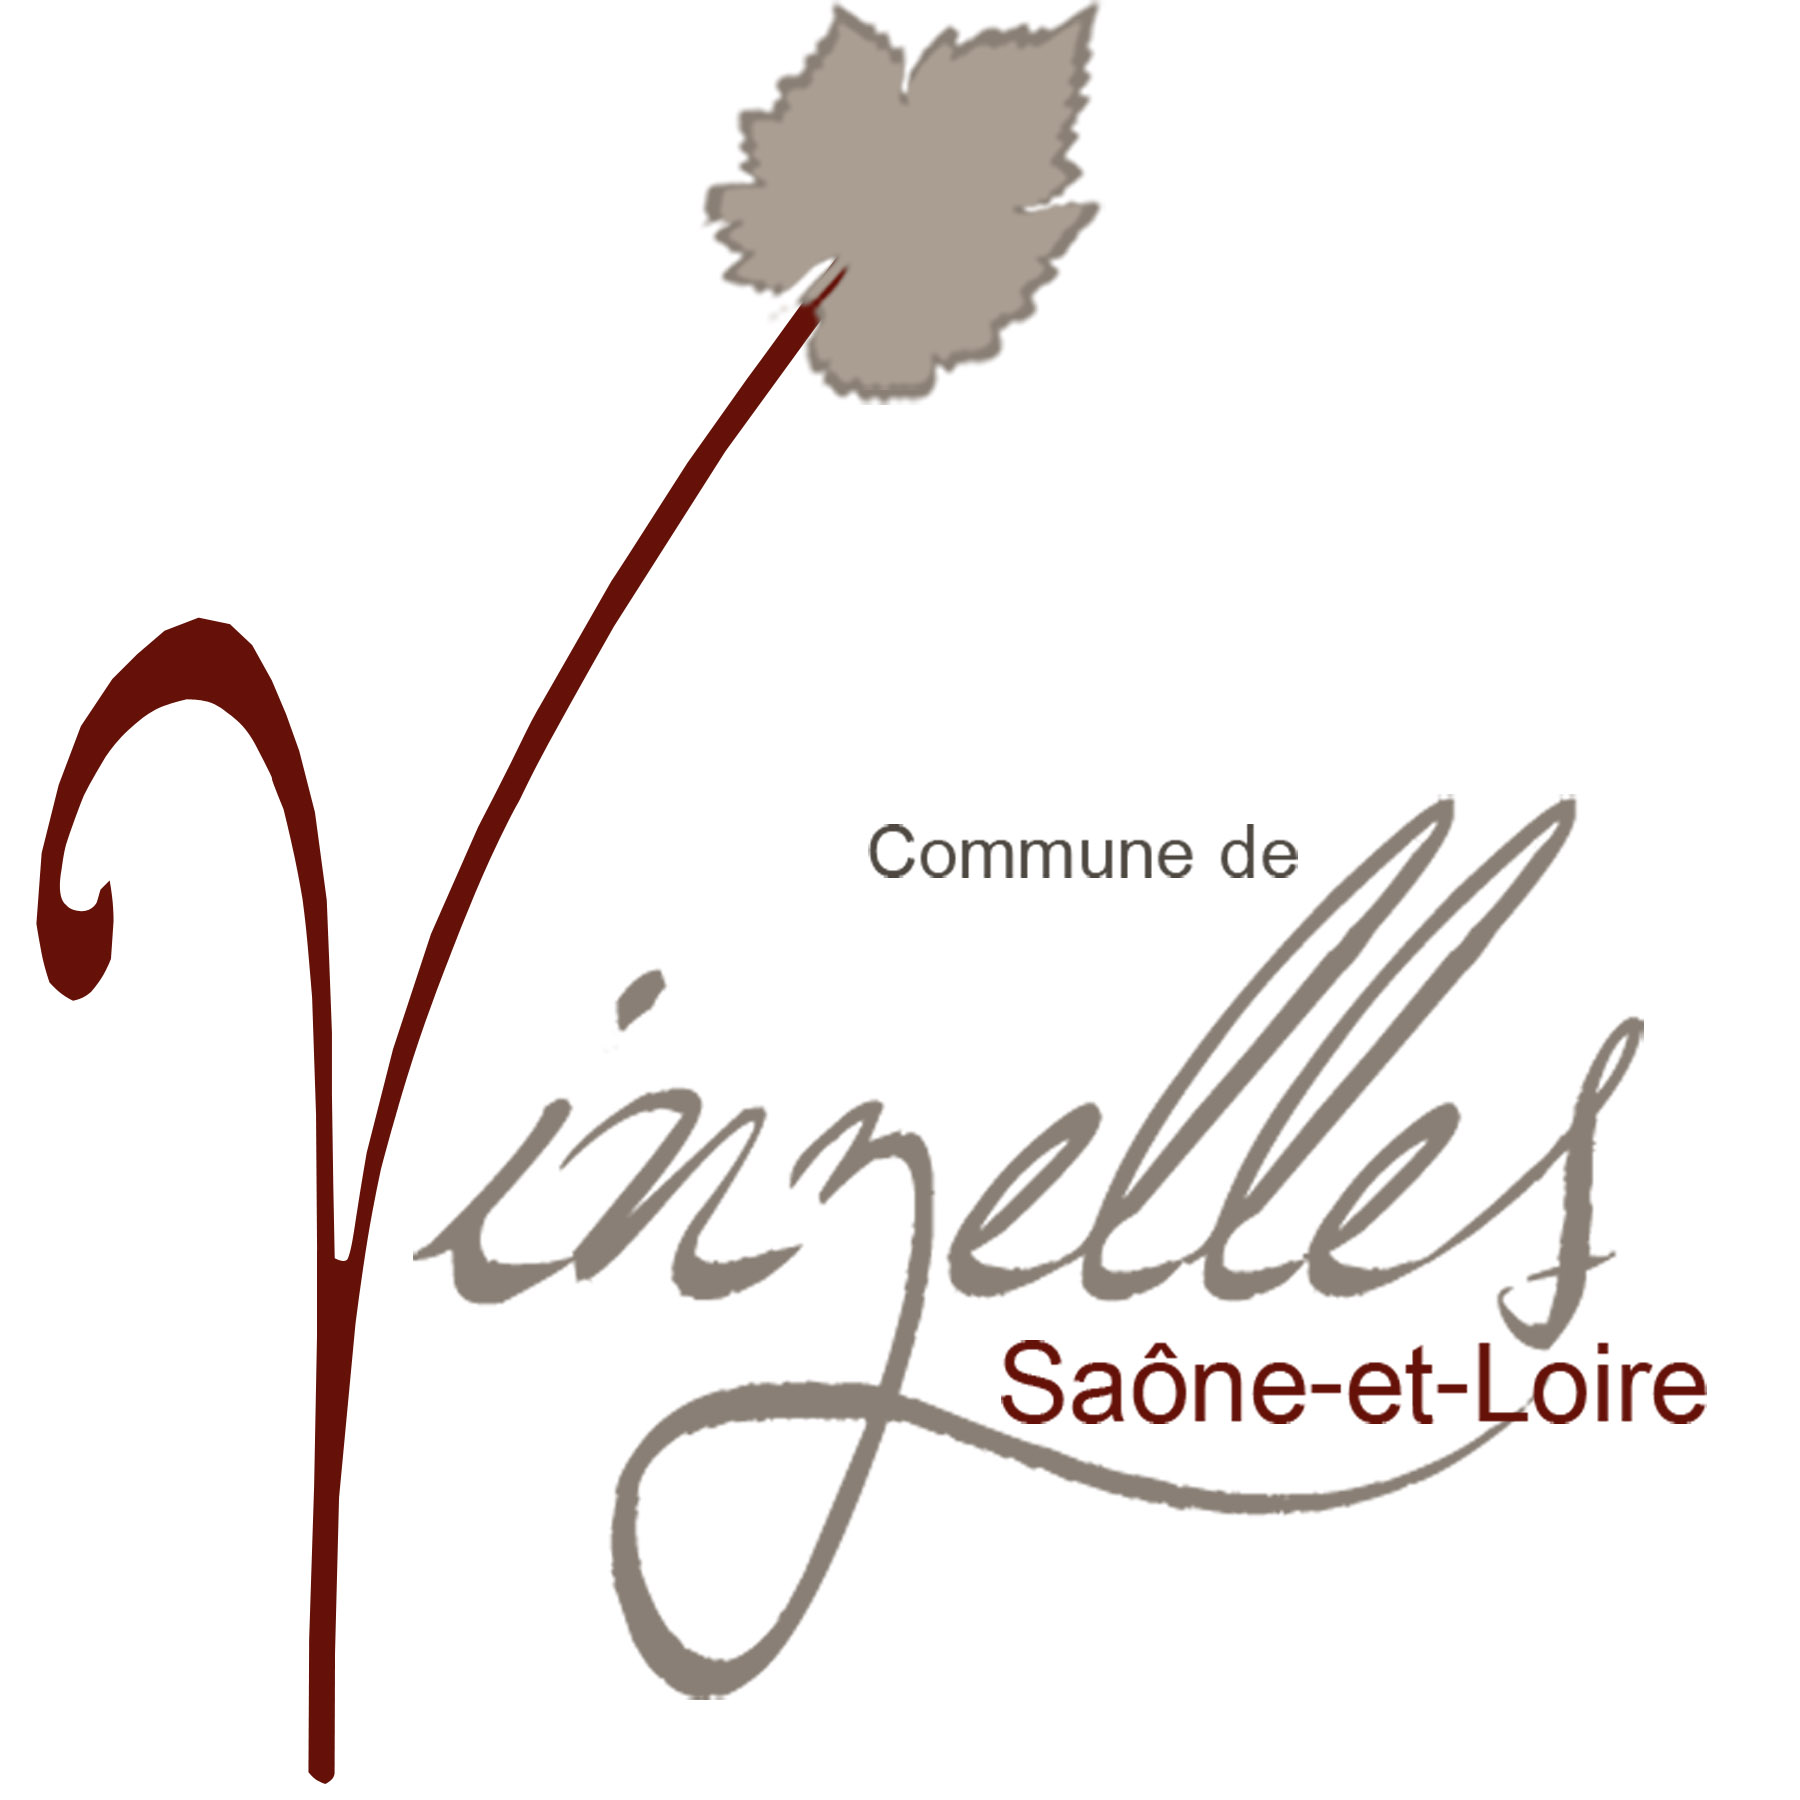 VINZELLES Logo 15x15.jpg